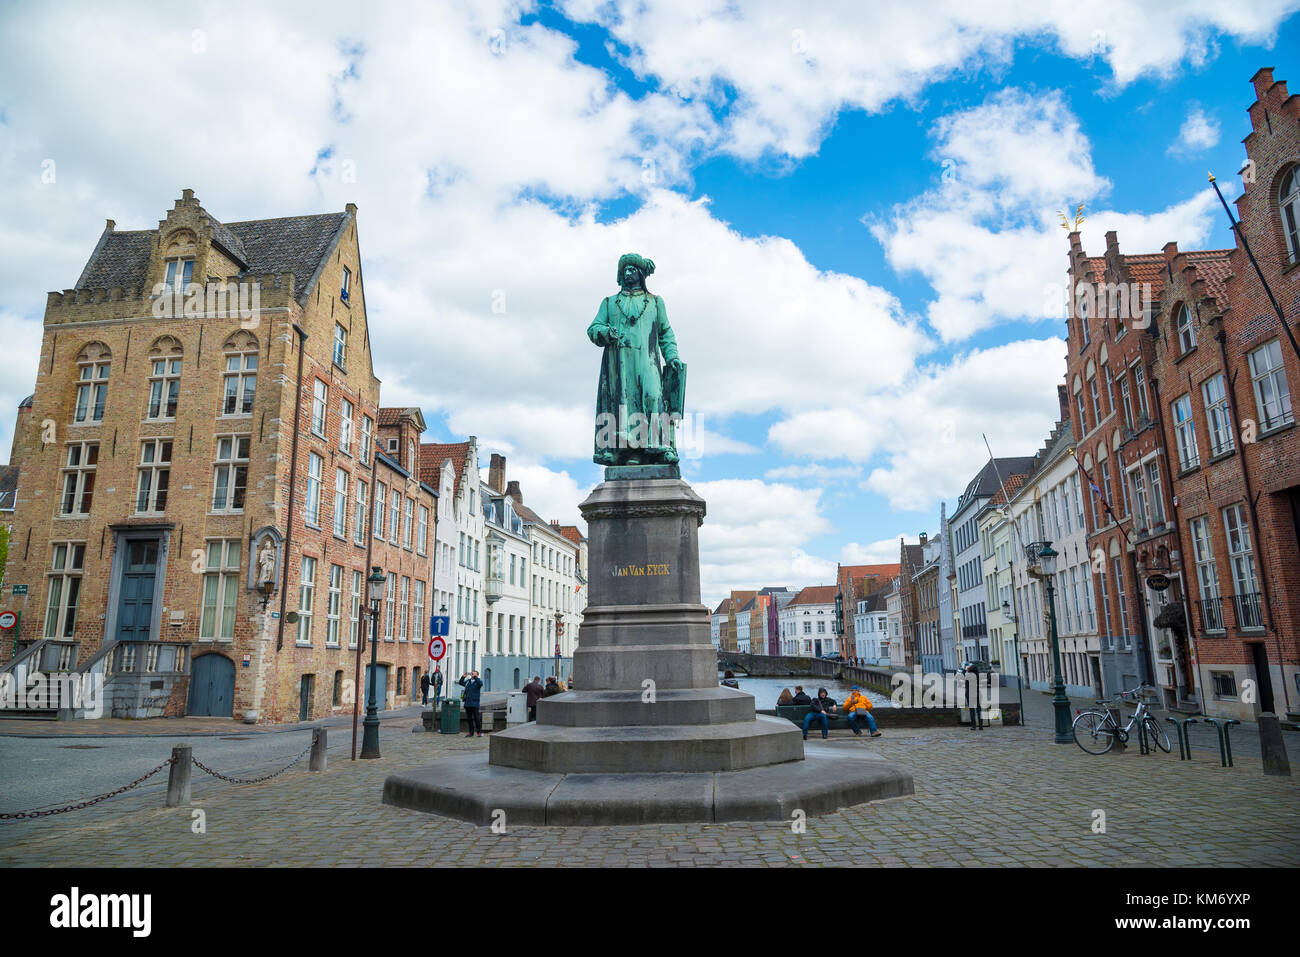 Bruges, Belgium - April 17, 2017: Statue of the Flemish painter Jan van Eyck in Bruges, Belgium Stock Photo